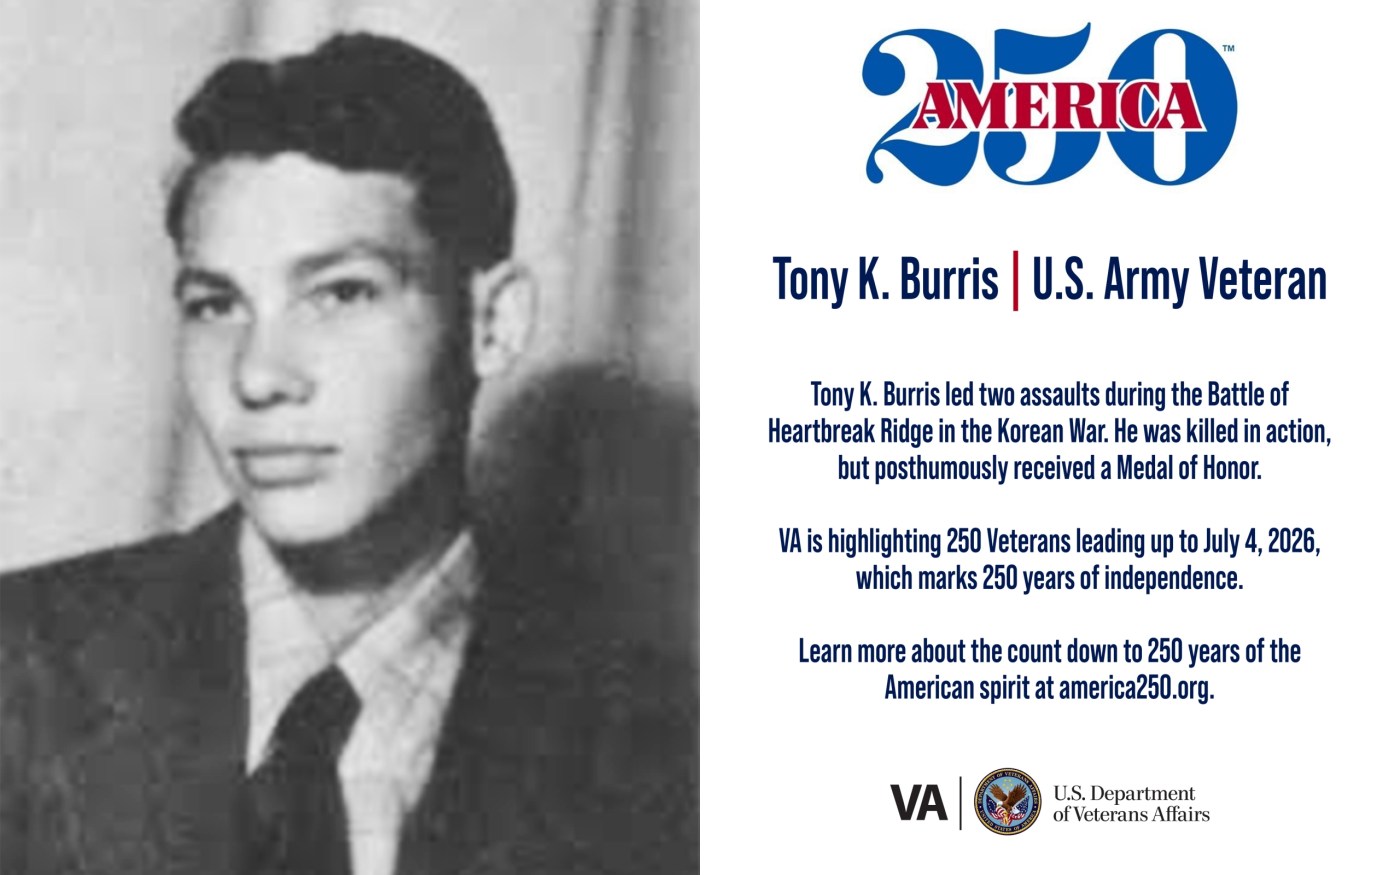 America250: Army Veteran Tony K. Burris